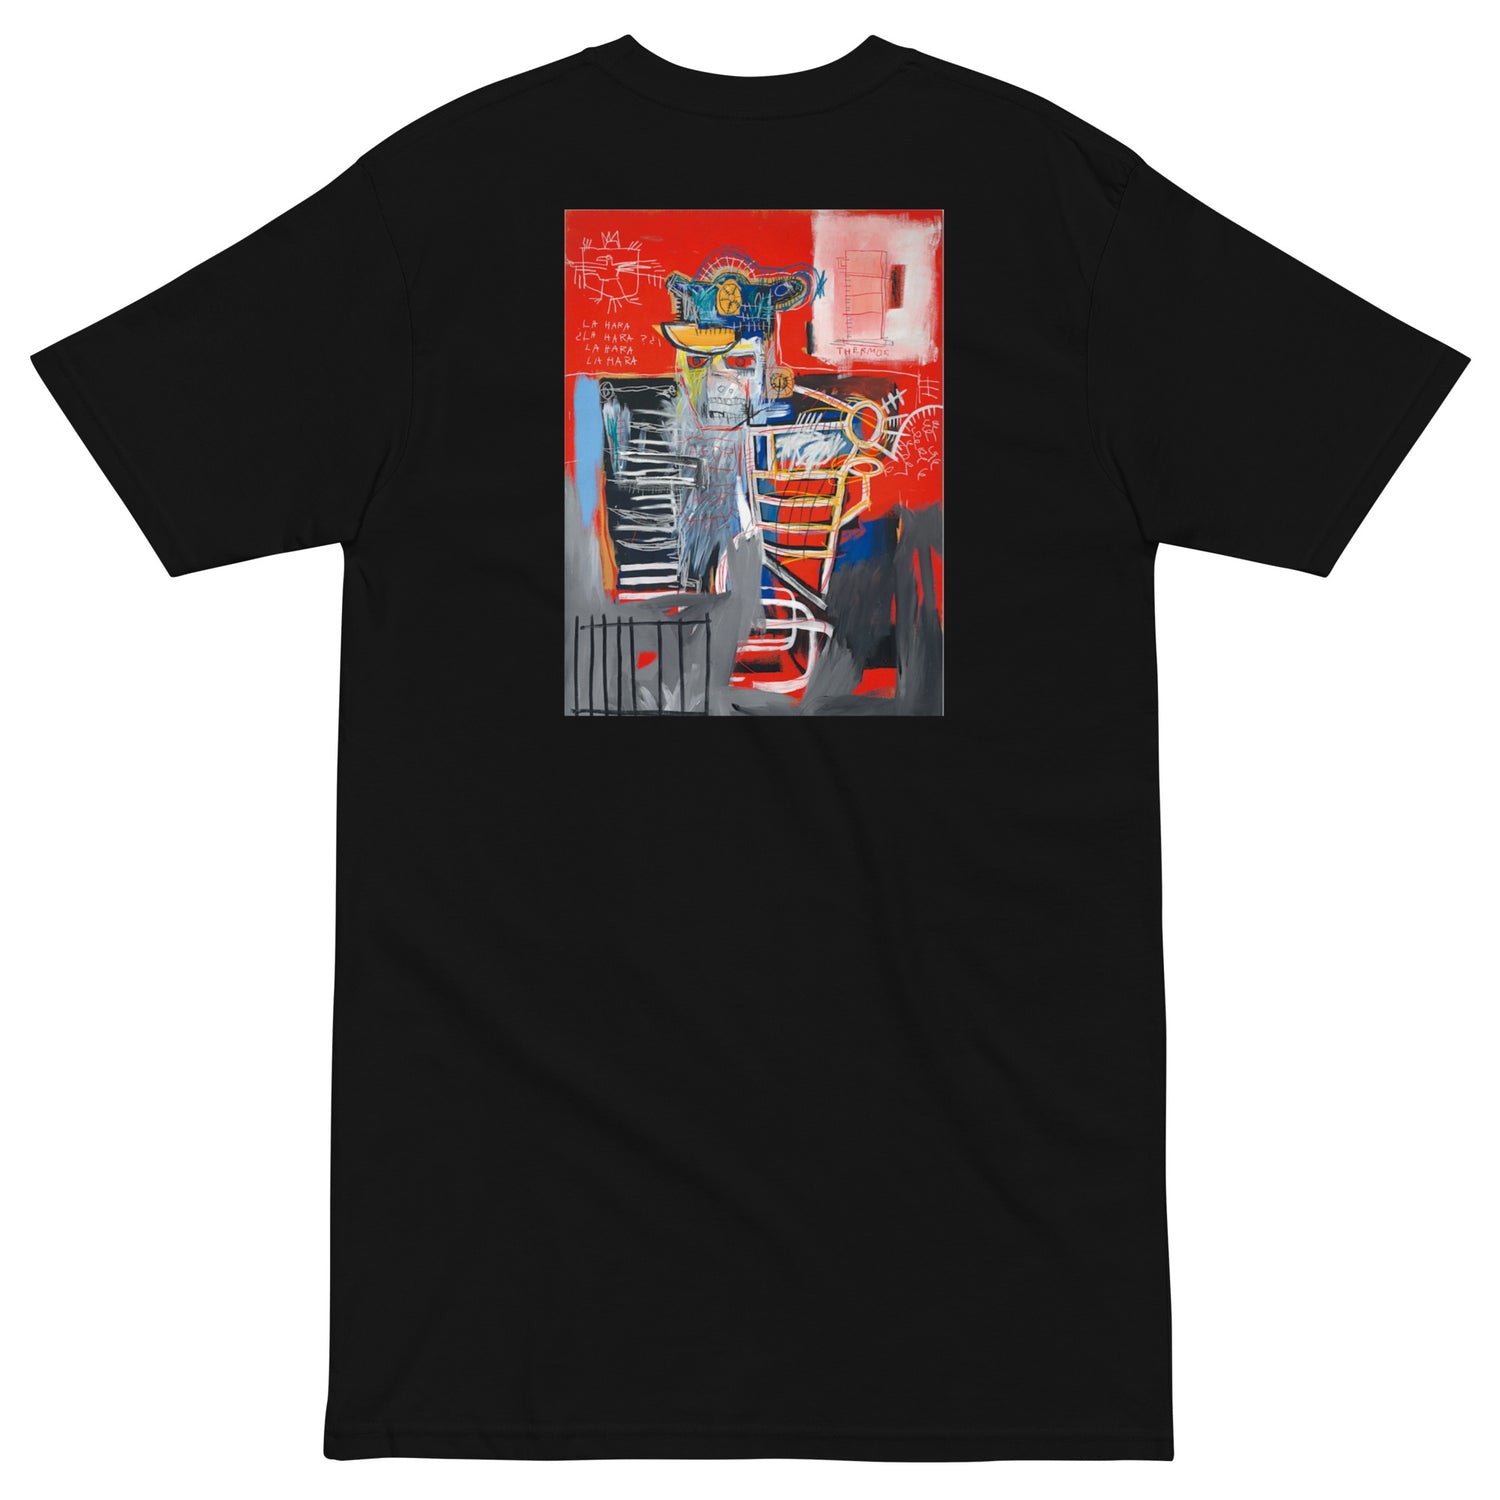 Jean-Michel Basquiat "La Hara" 1981 Artwork Embroidered + Printed Premium Streetwear Black T-shirt 